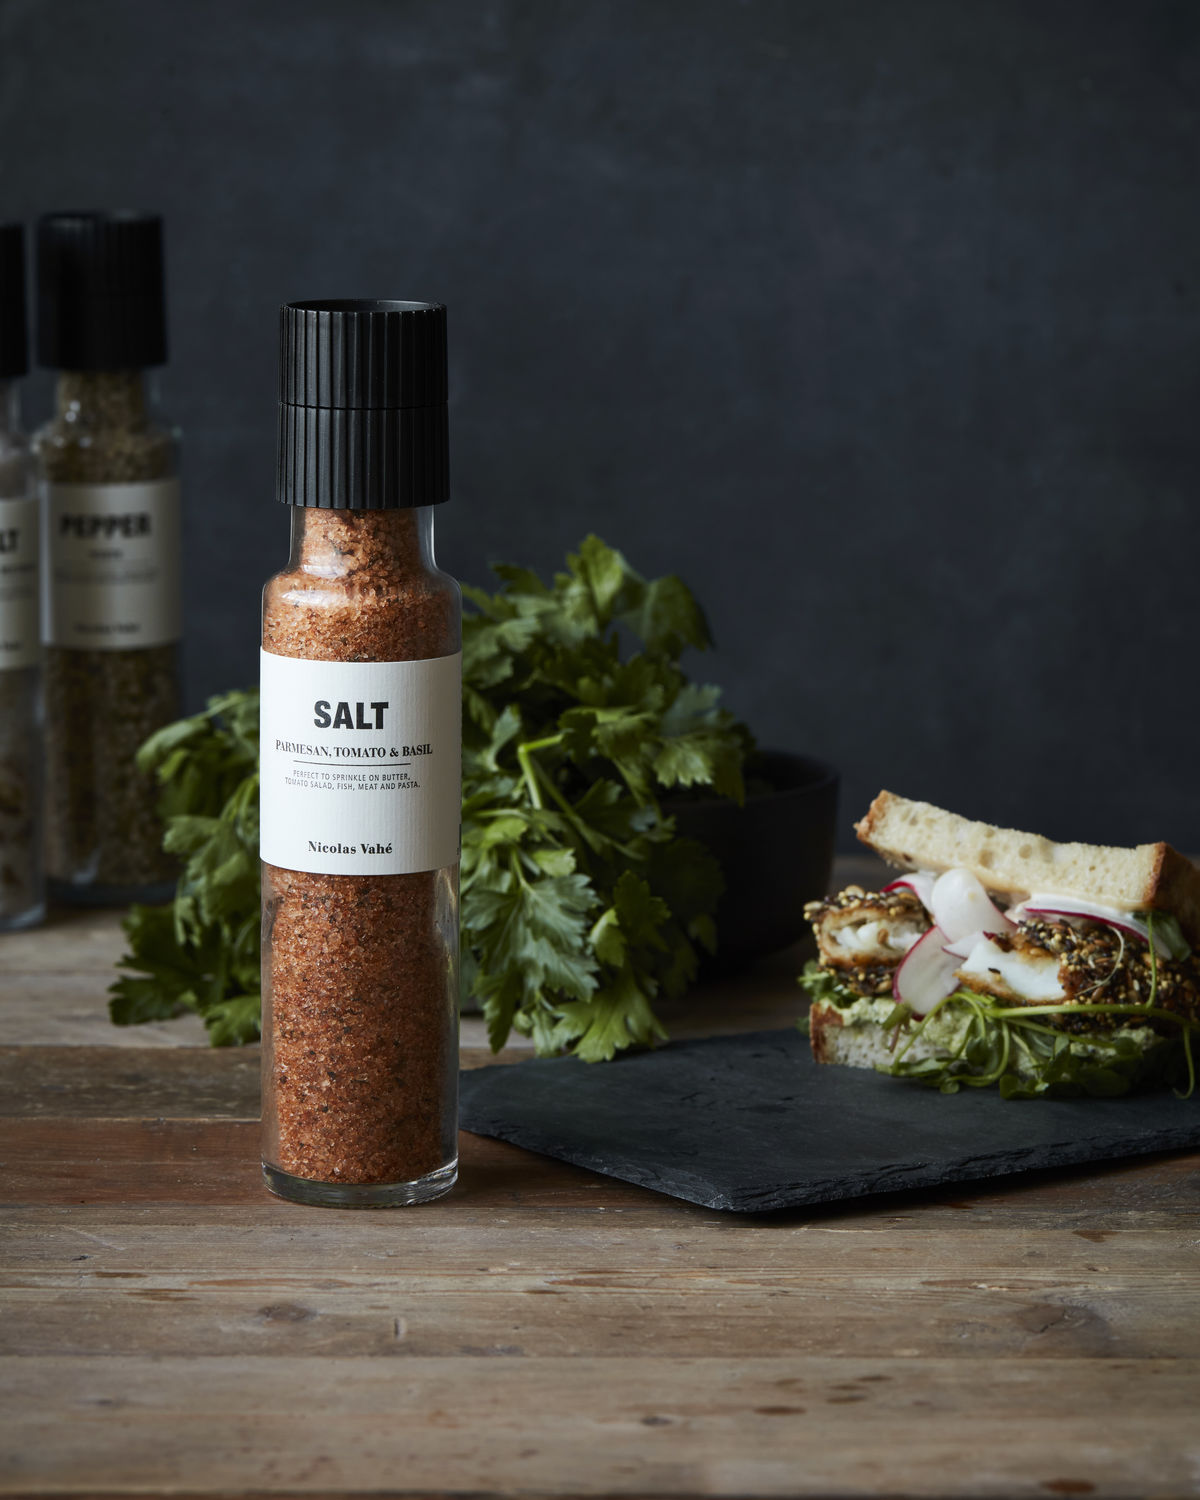 Salt – Salt, Parmesan, Tomato & Basil 300g